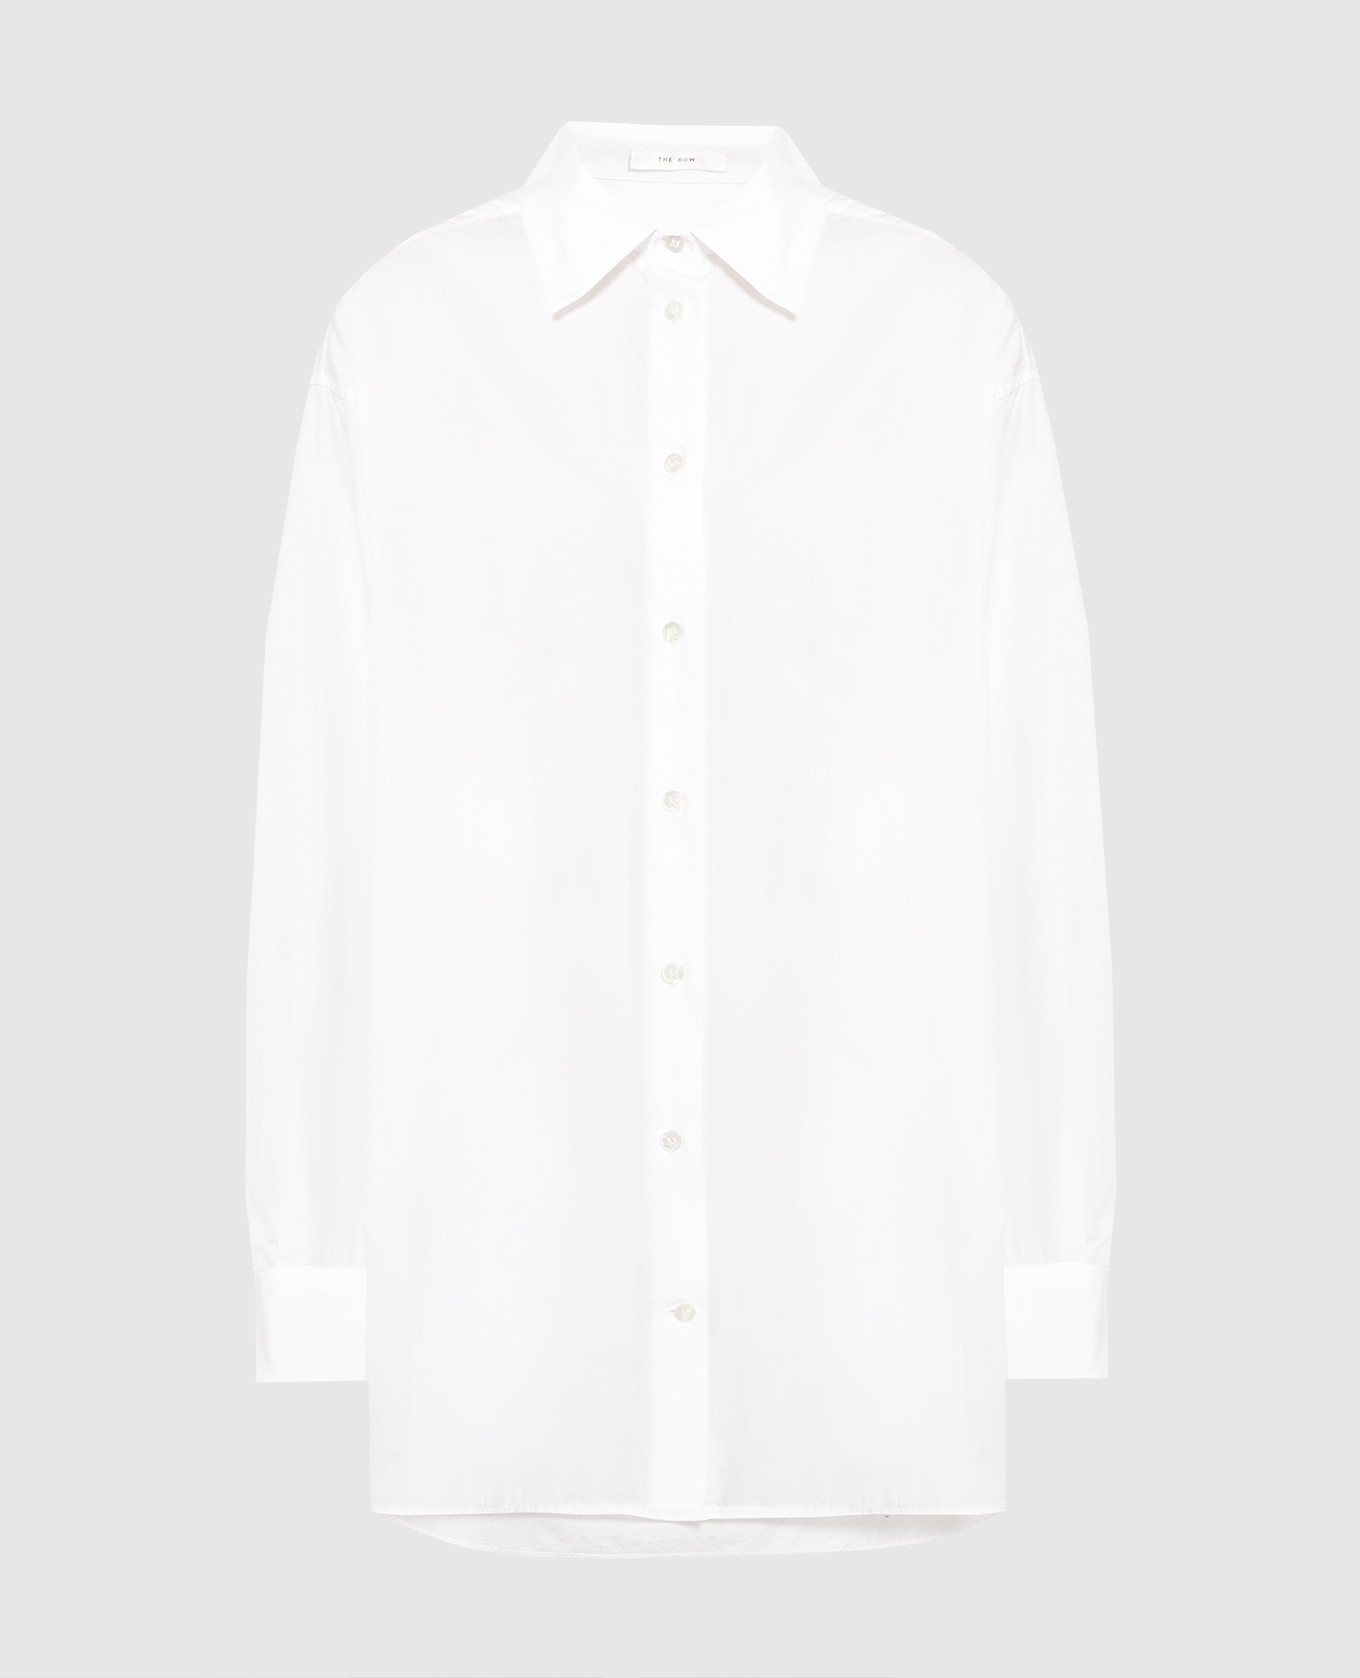 Luka's white shirt